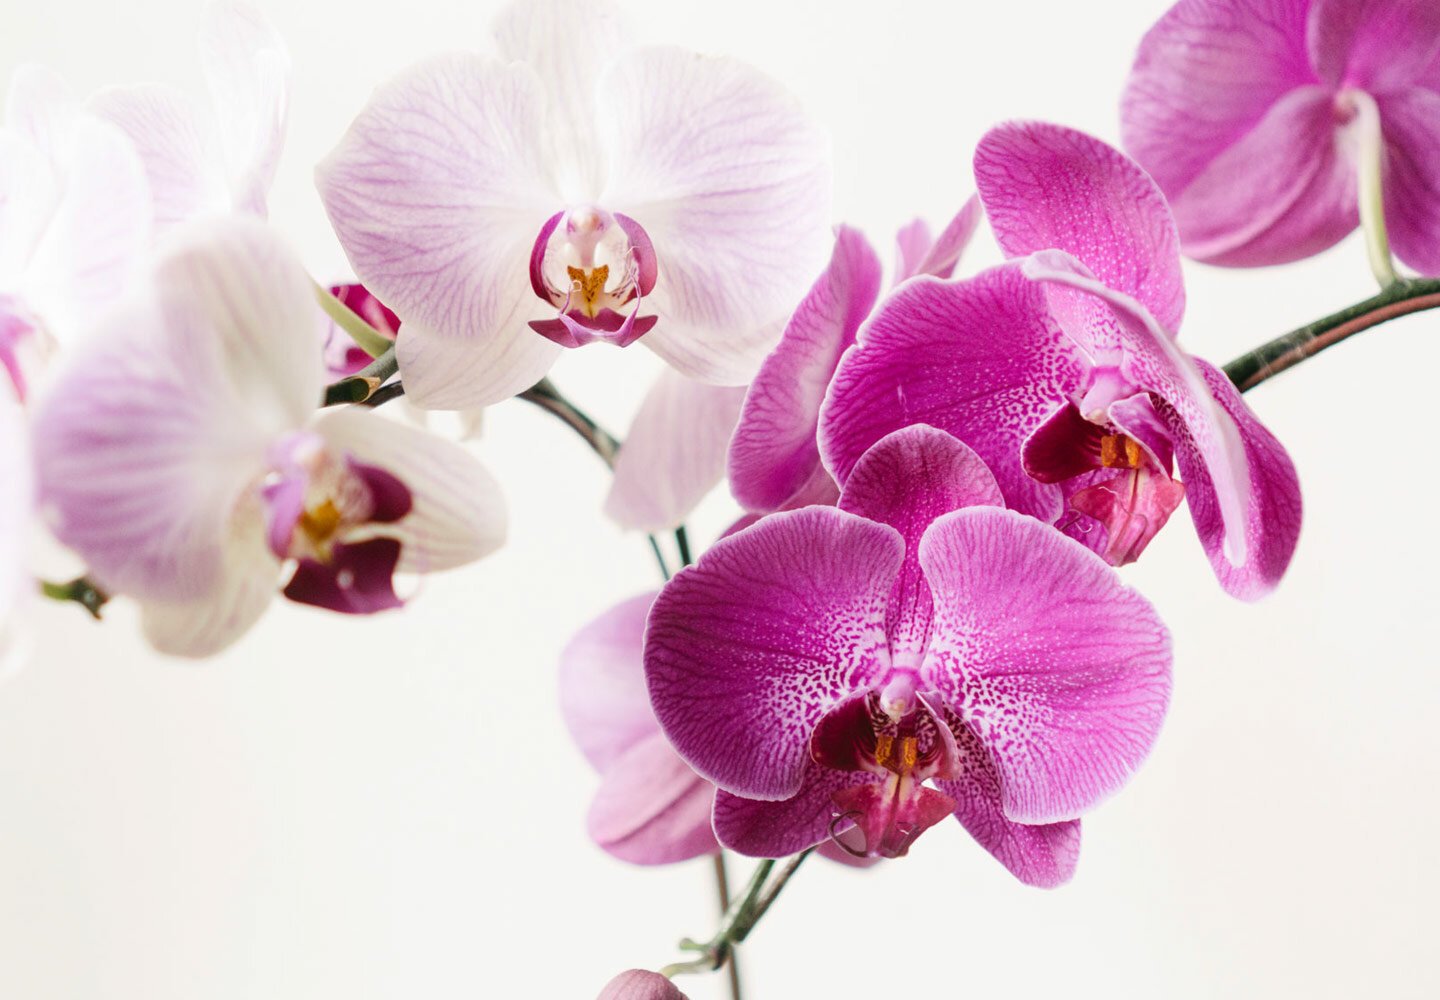 Orkidé och dess sjukdomar